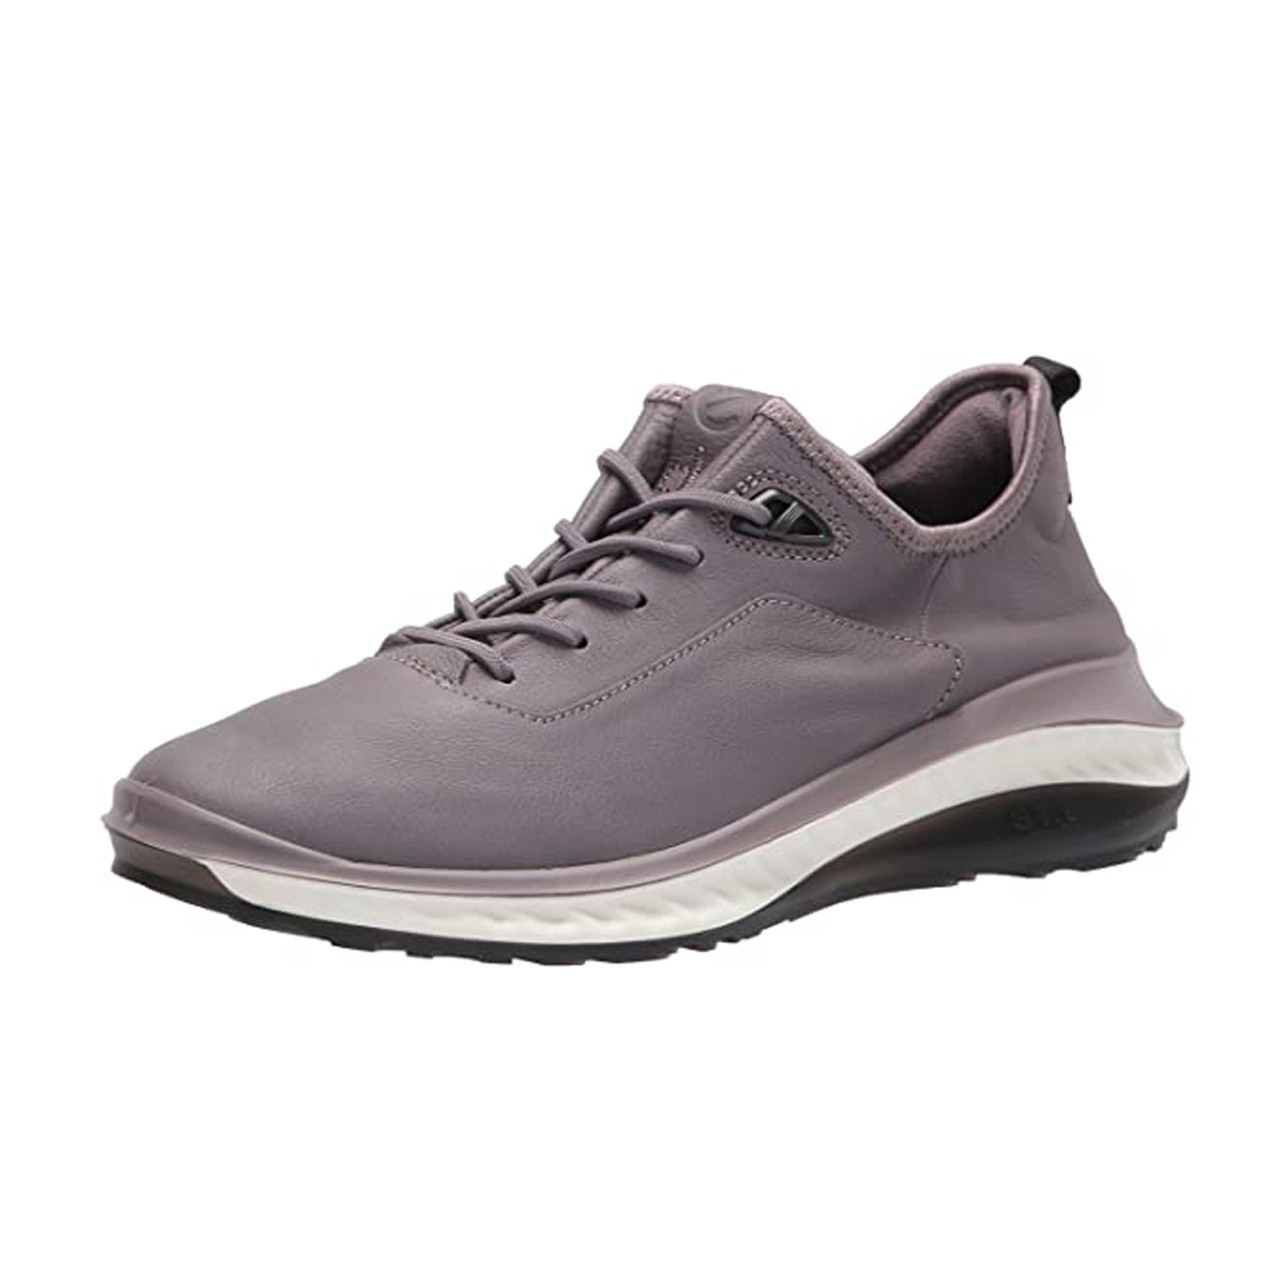 ECCO Men's ST.360 Sneakers - Grey | Discount Men's Shoes More - Shoolu.com | Shoolu.com